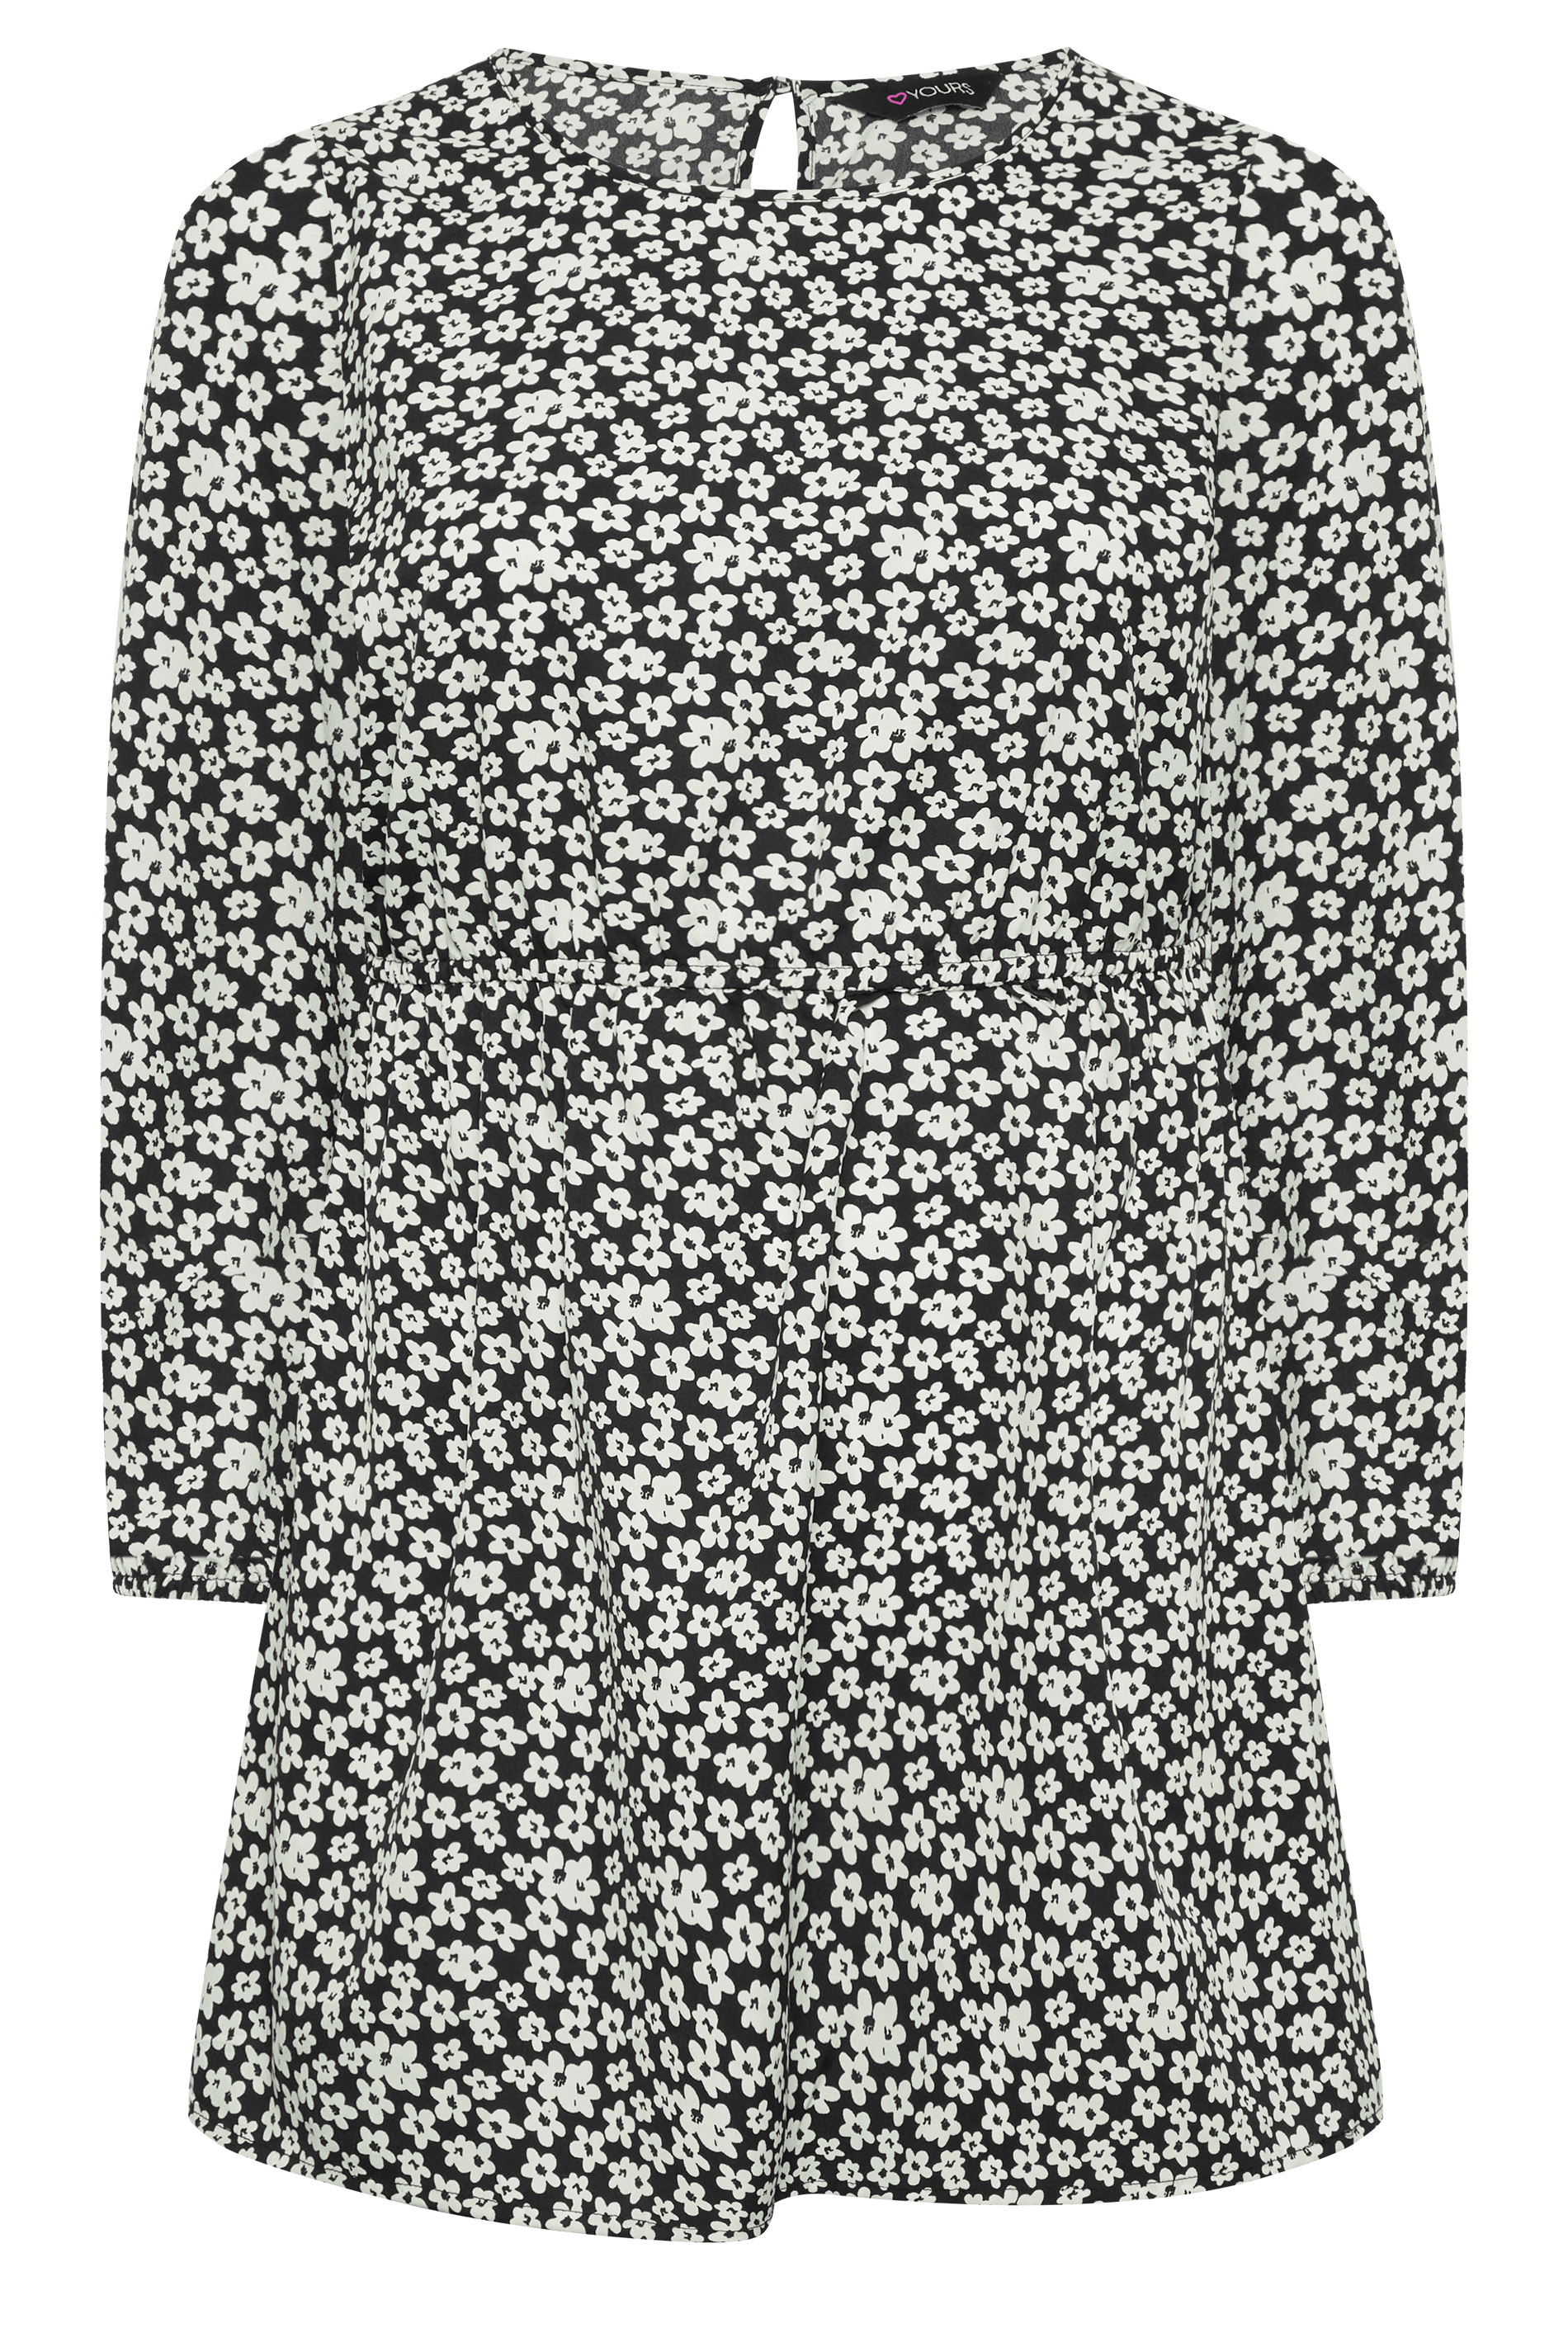 Topshop shirred waist polka dot blouse in monochrome